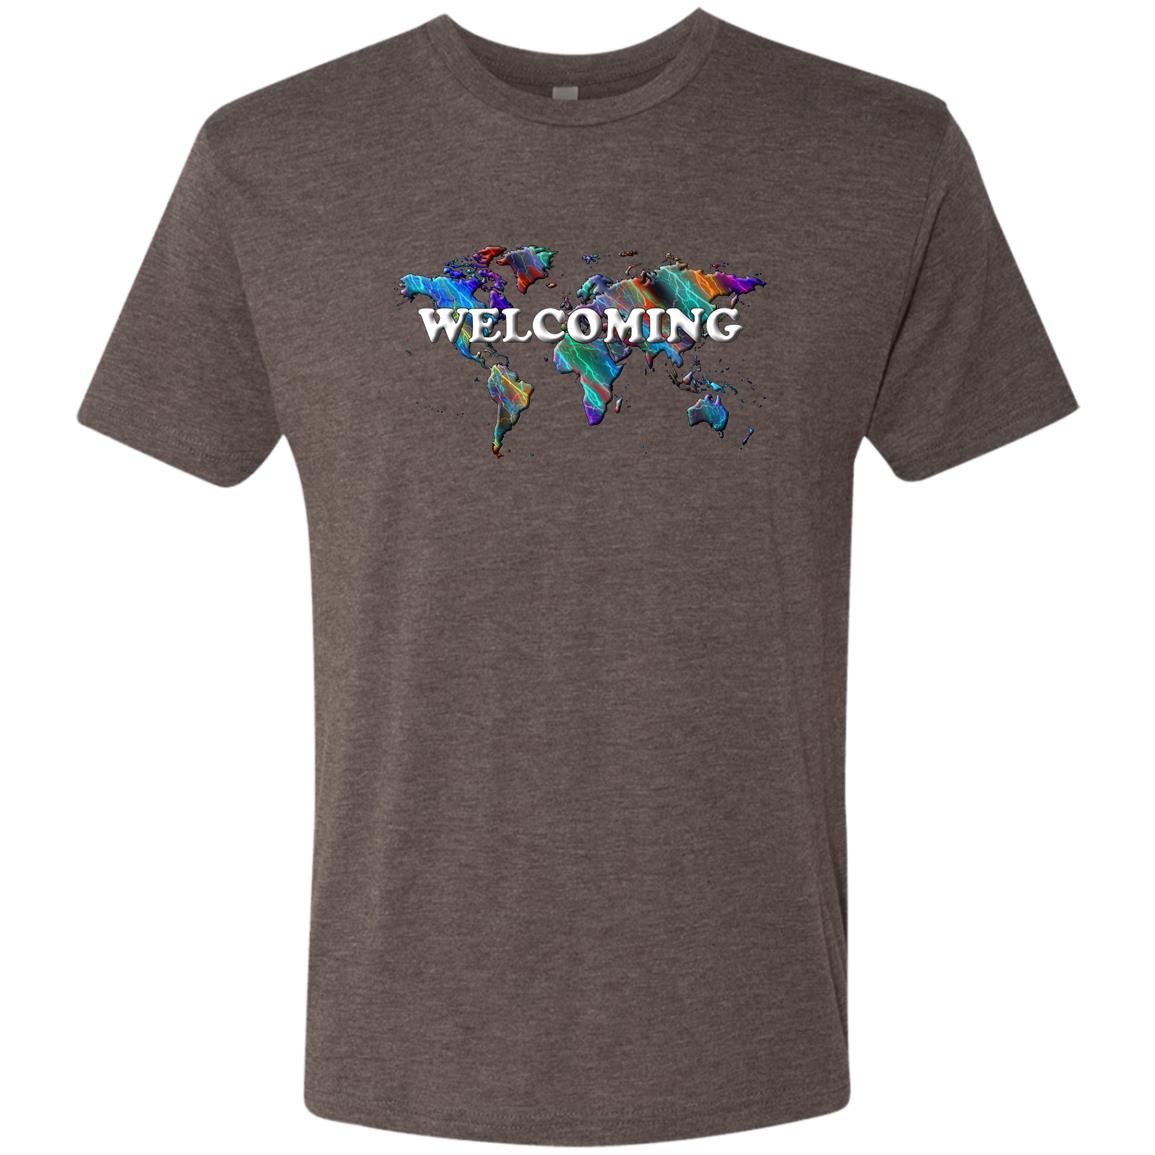 Welcoming T-shirt